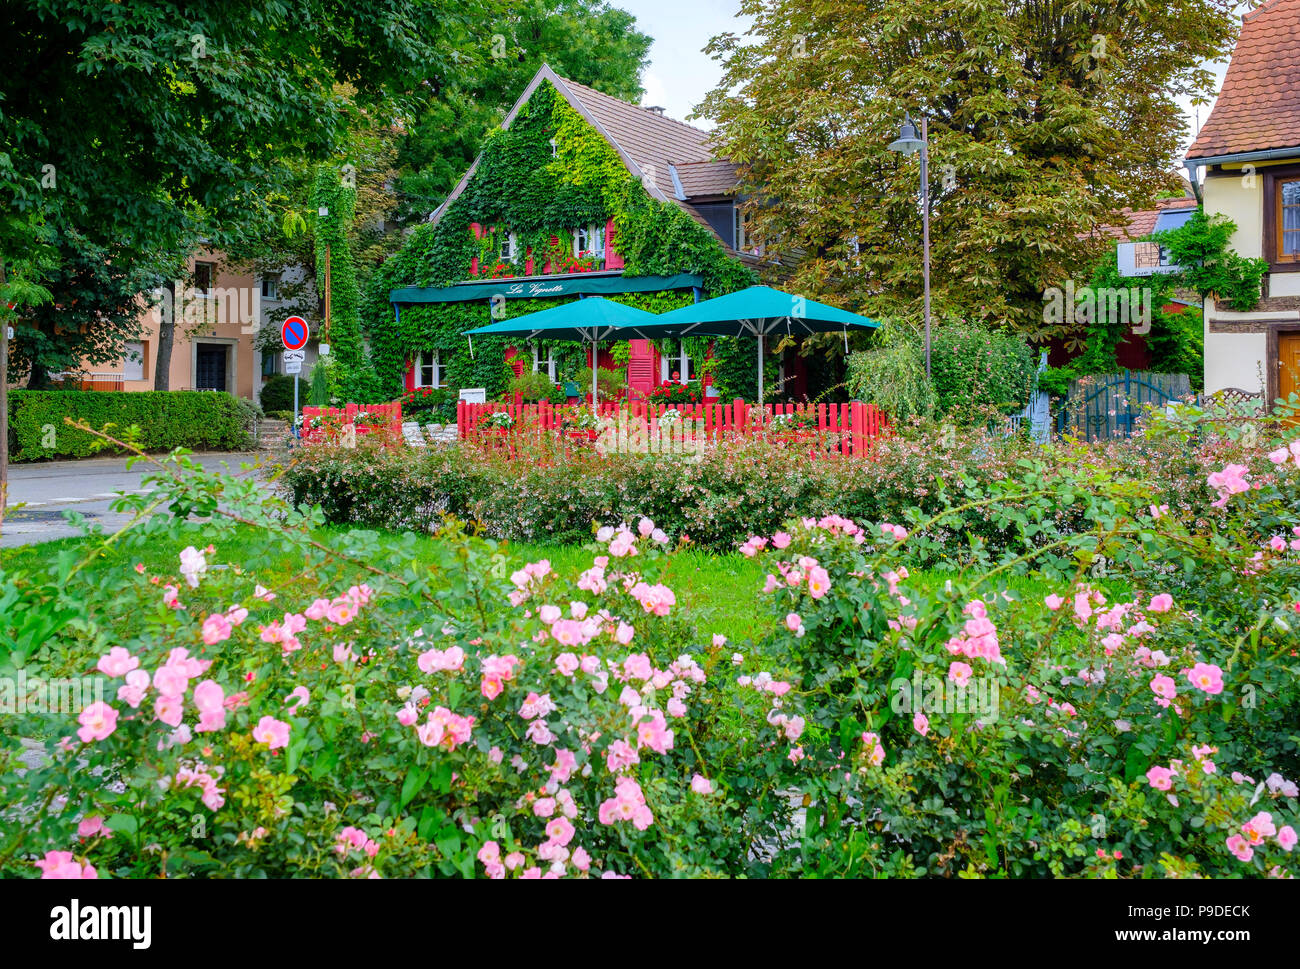 Strasbourg, restaurant La Vignette, ivy-covered house, red pickets fence, flowered garden, Alsace, France, Europe, Stock Photo